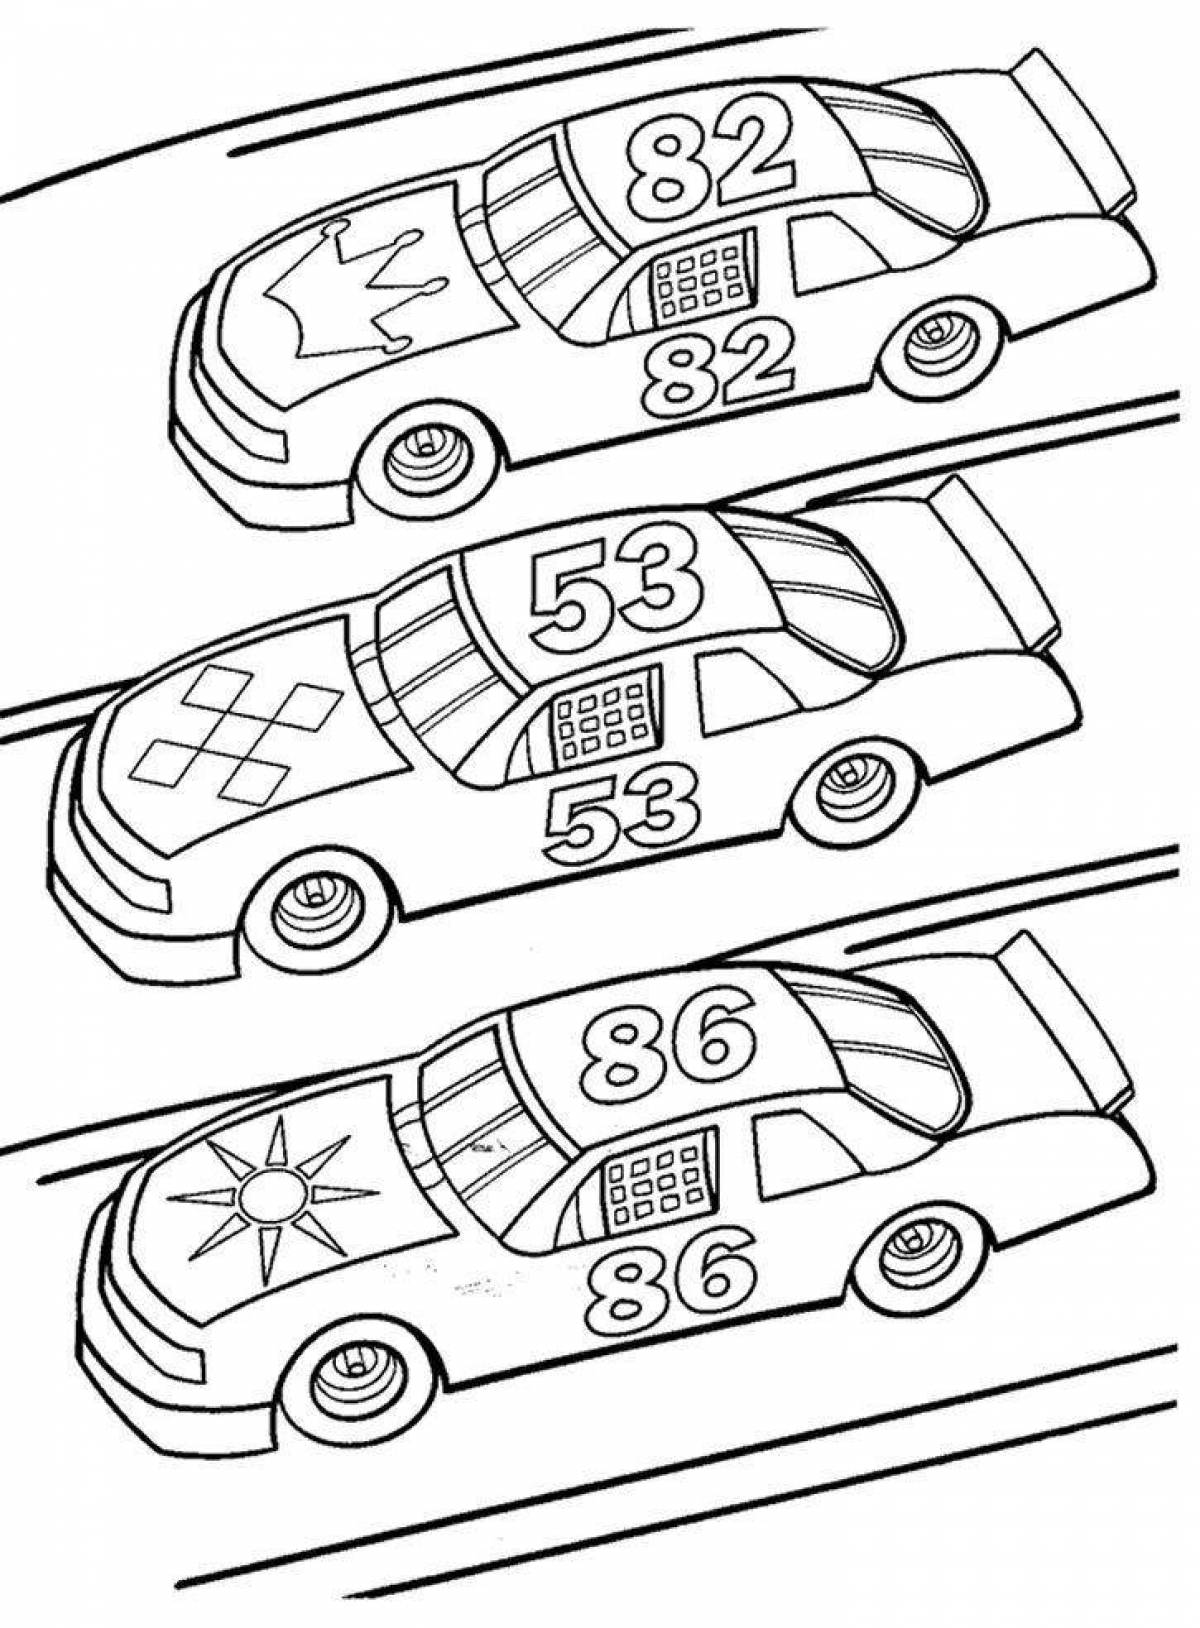 Glamorous racing car coloring page